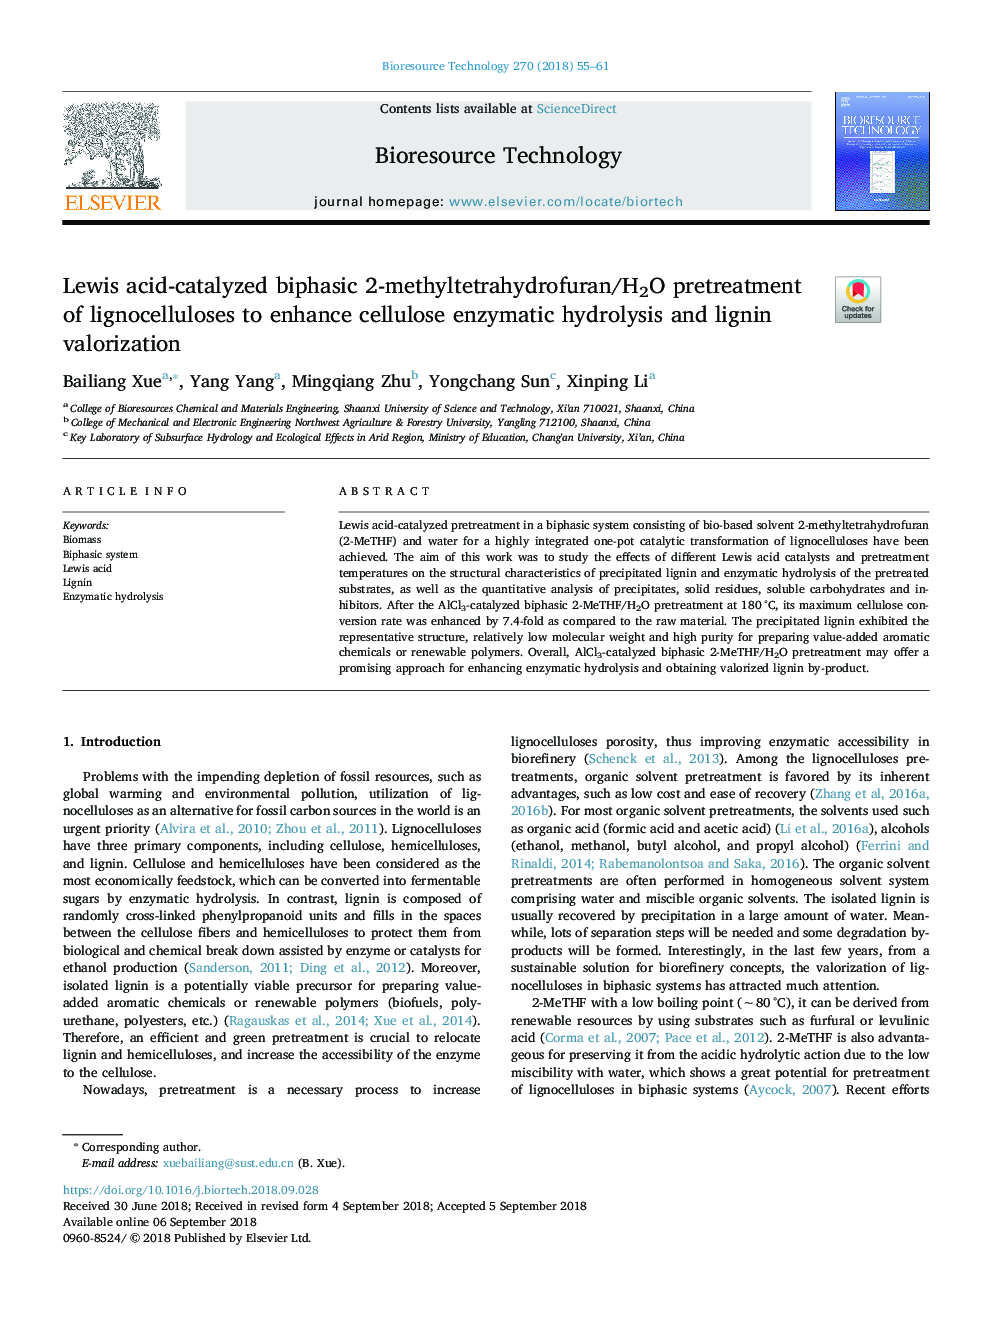 Lewis acid-catalyzed biphasic 2-methyltetrahydrofuran/H2O pretreatment of lignocelluloses to enhance cellulose enzymatic hydrolysis and lignin valorization